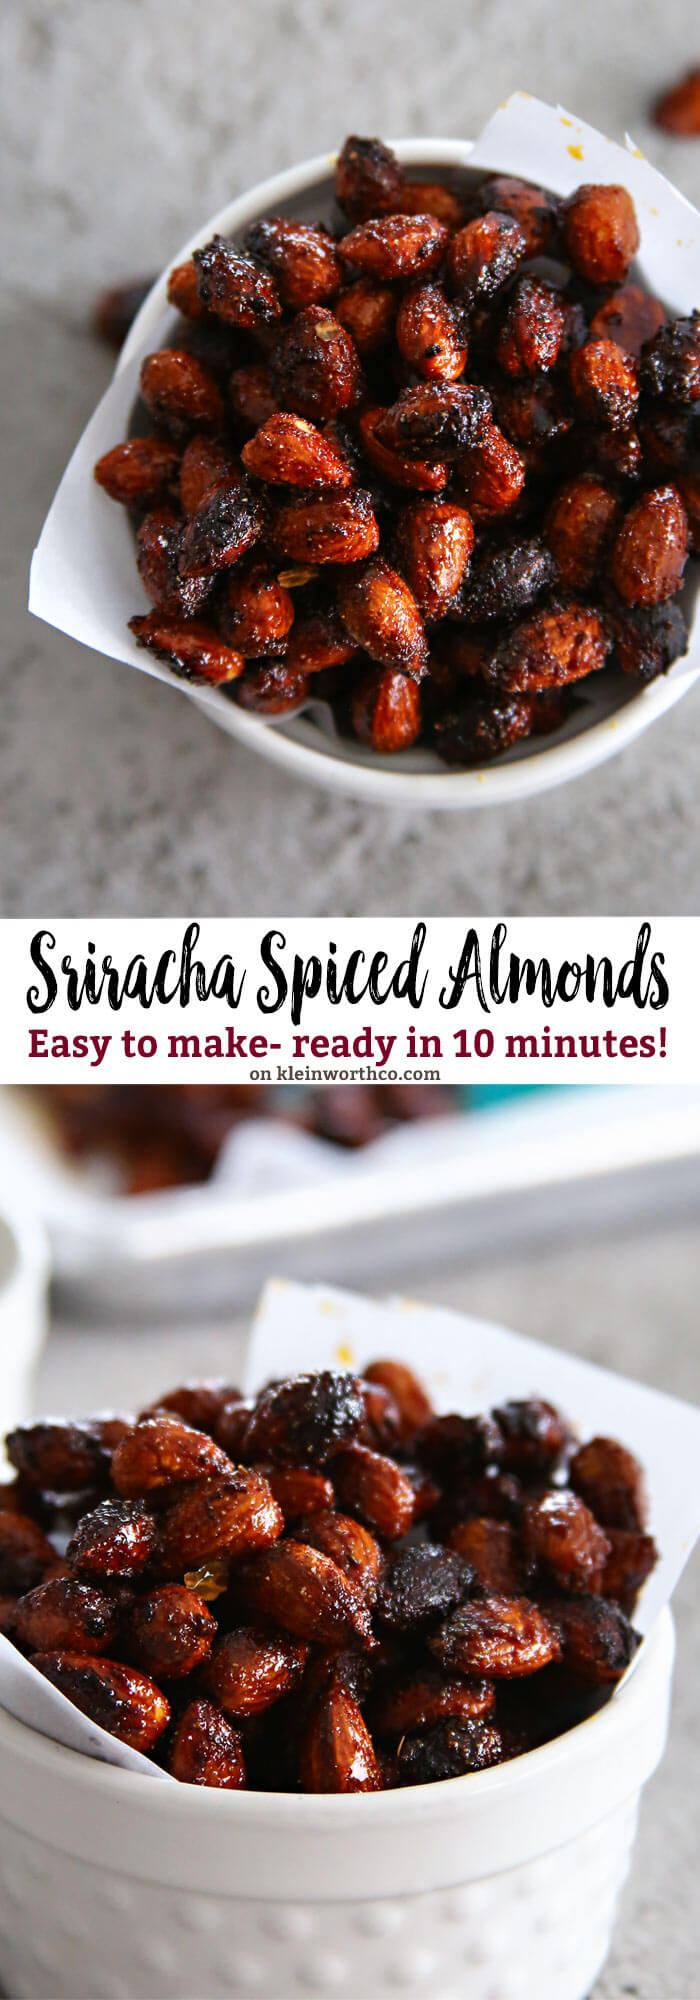 Sriracha Spice Almonds